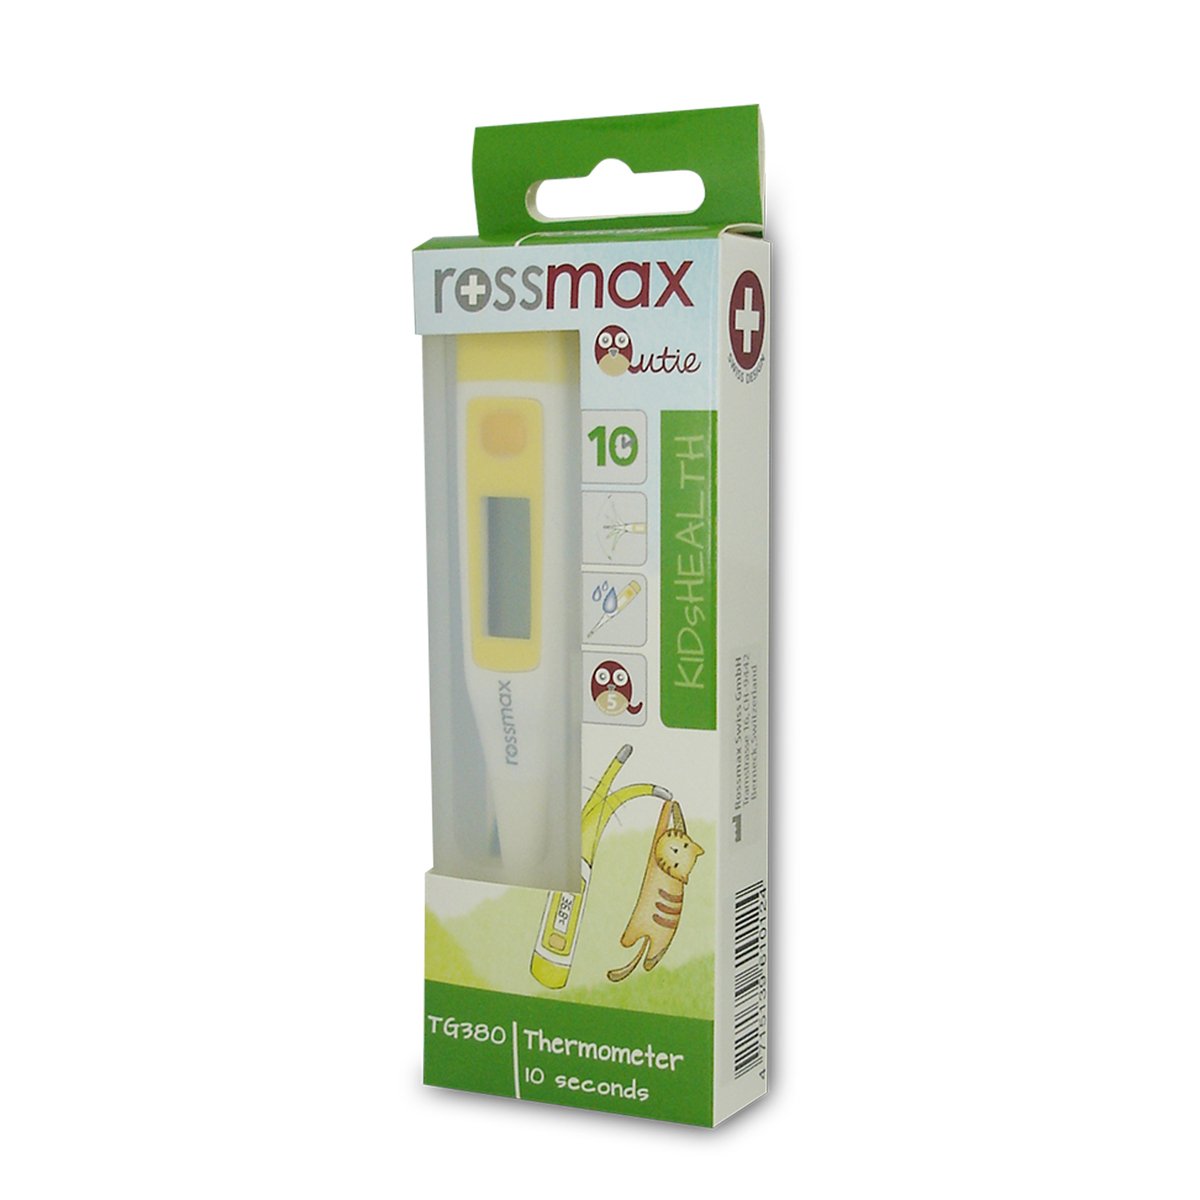 Rossmax Flexible Thermometer TG380Q